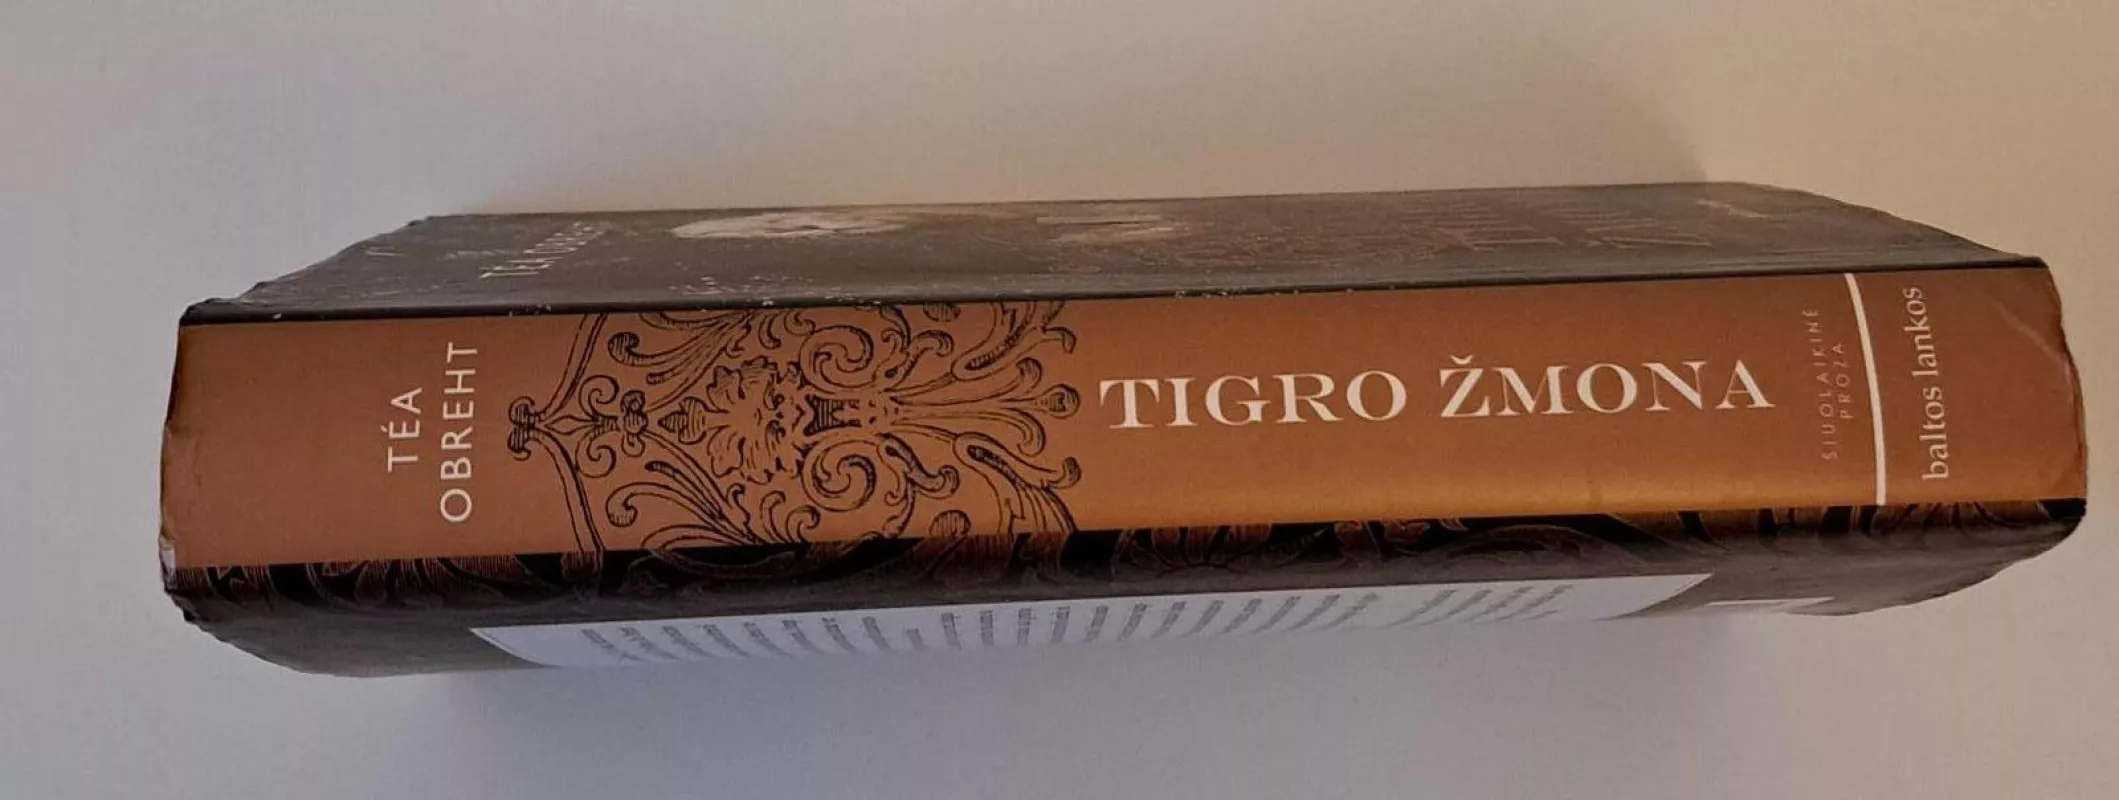 Tigro žmona - Obreht Tea, knyga 4